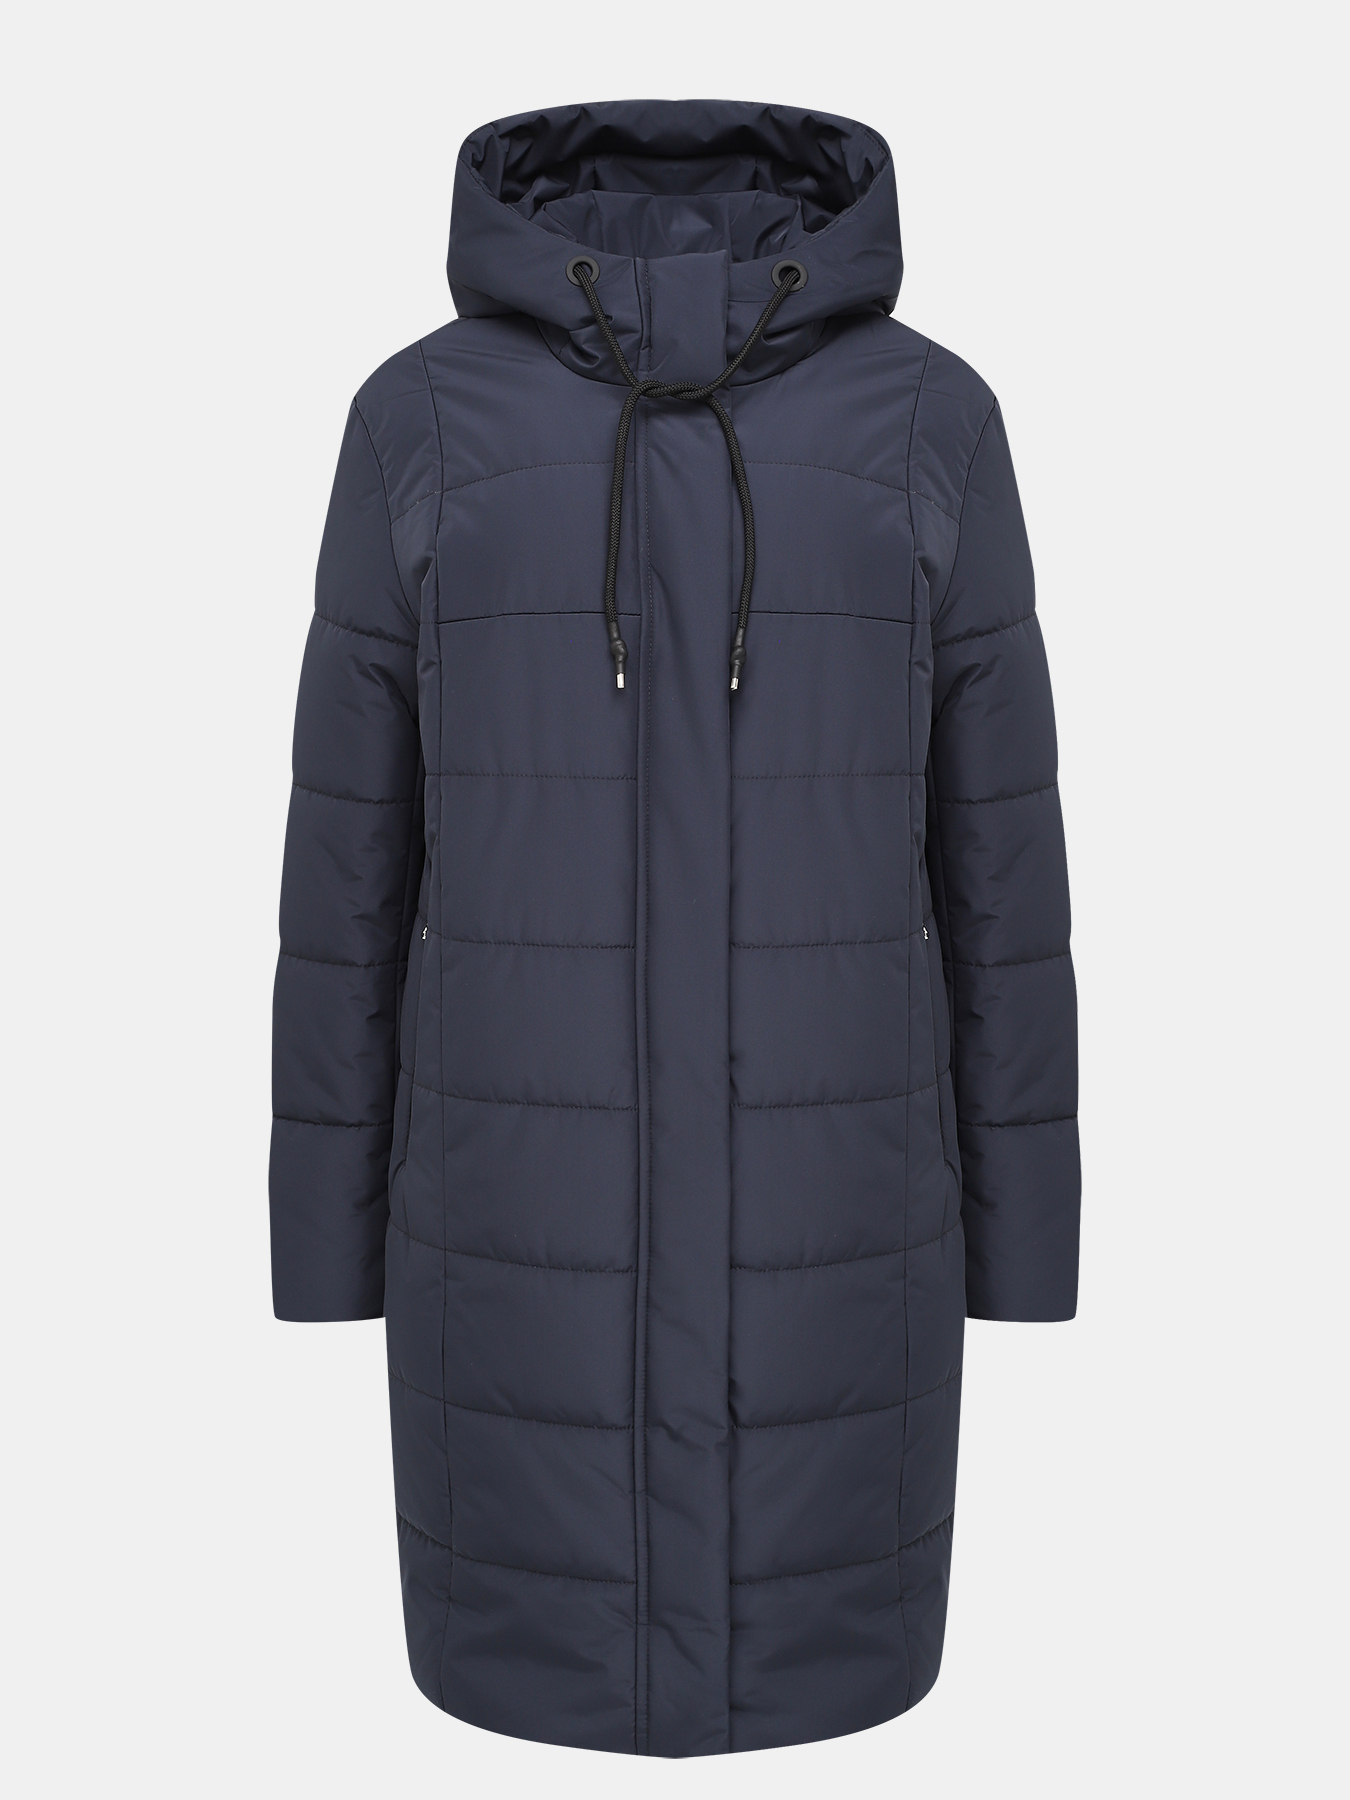 Пальто зимнее Maritta 433548-025, цвет темно-синий, размер 48